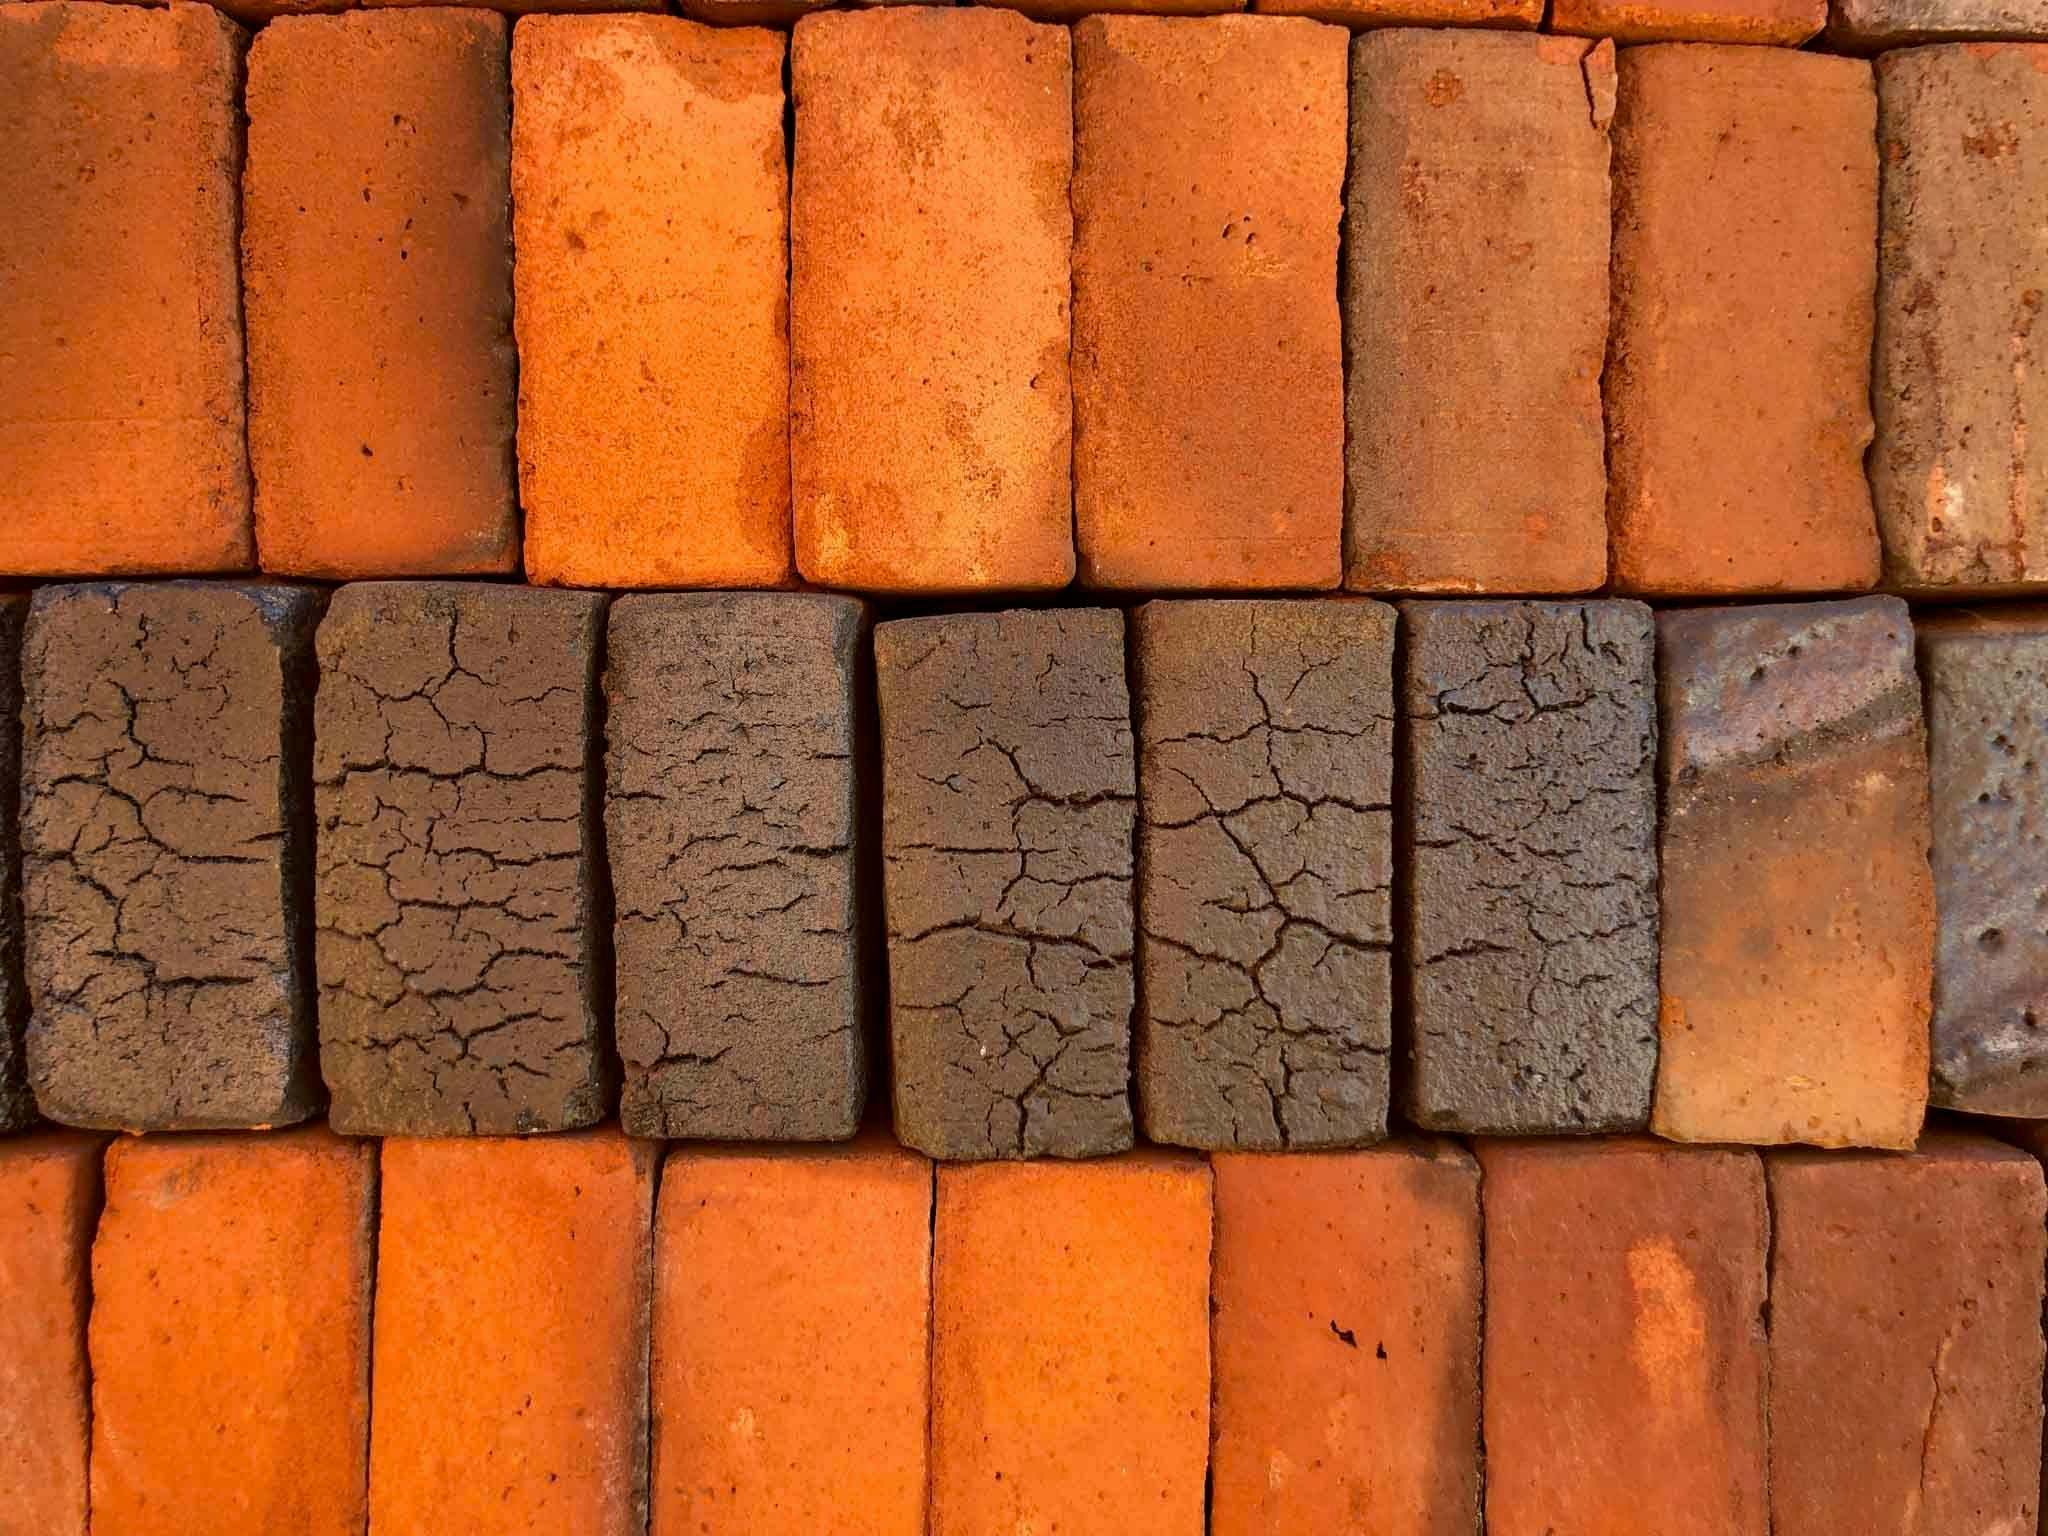 Detail of kiln fired clay bricks.